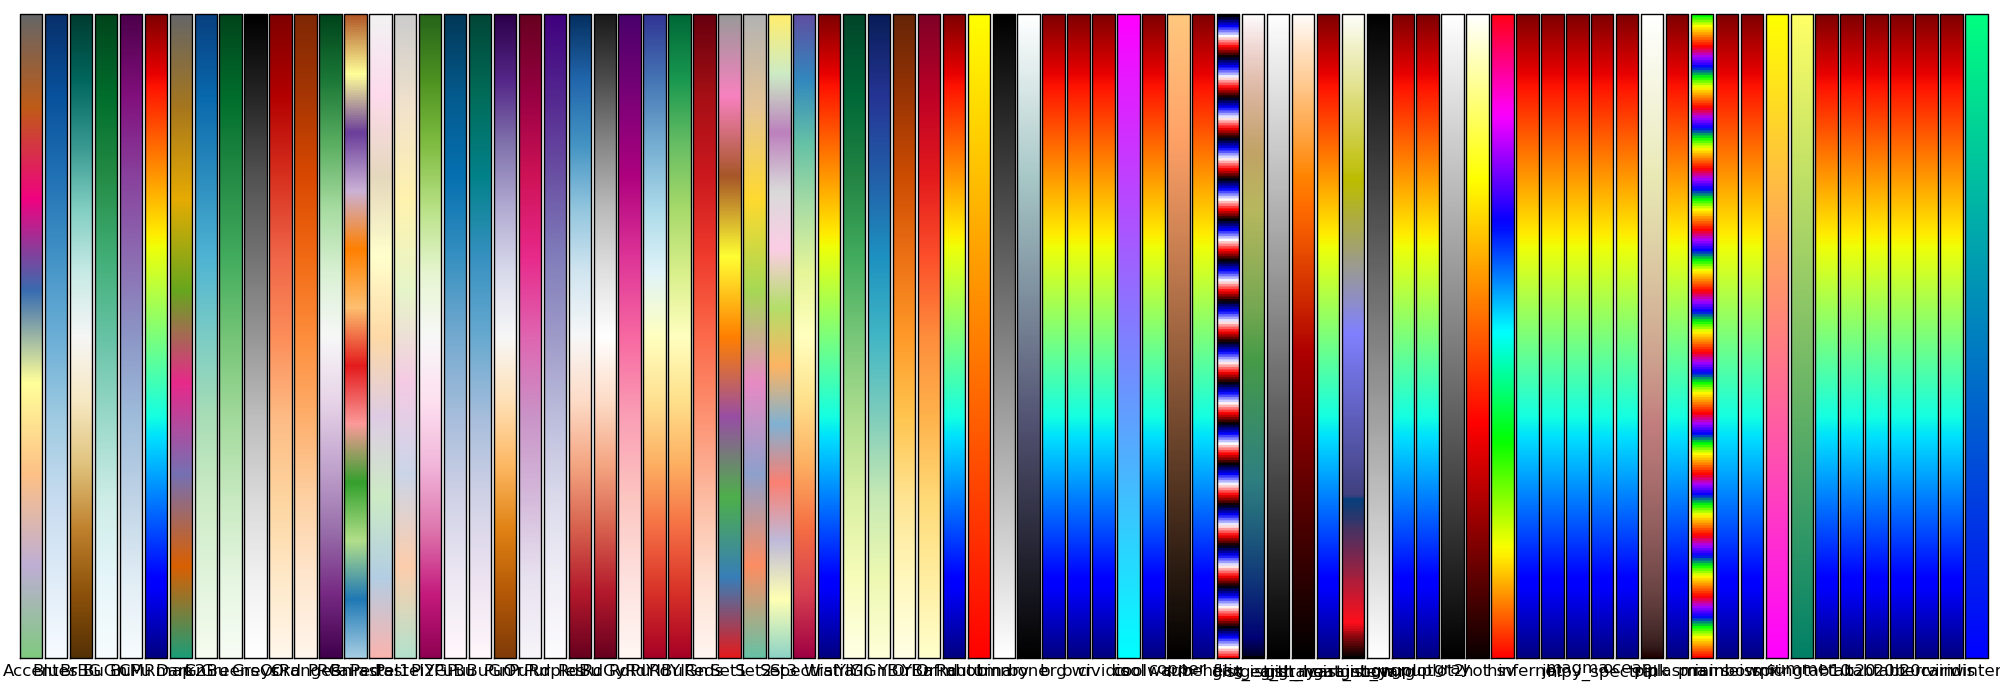 matplotlib colormaps cm